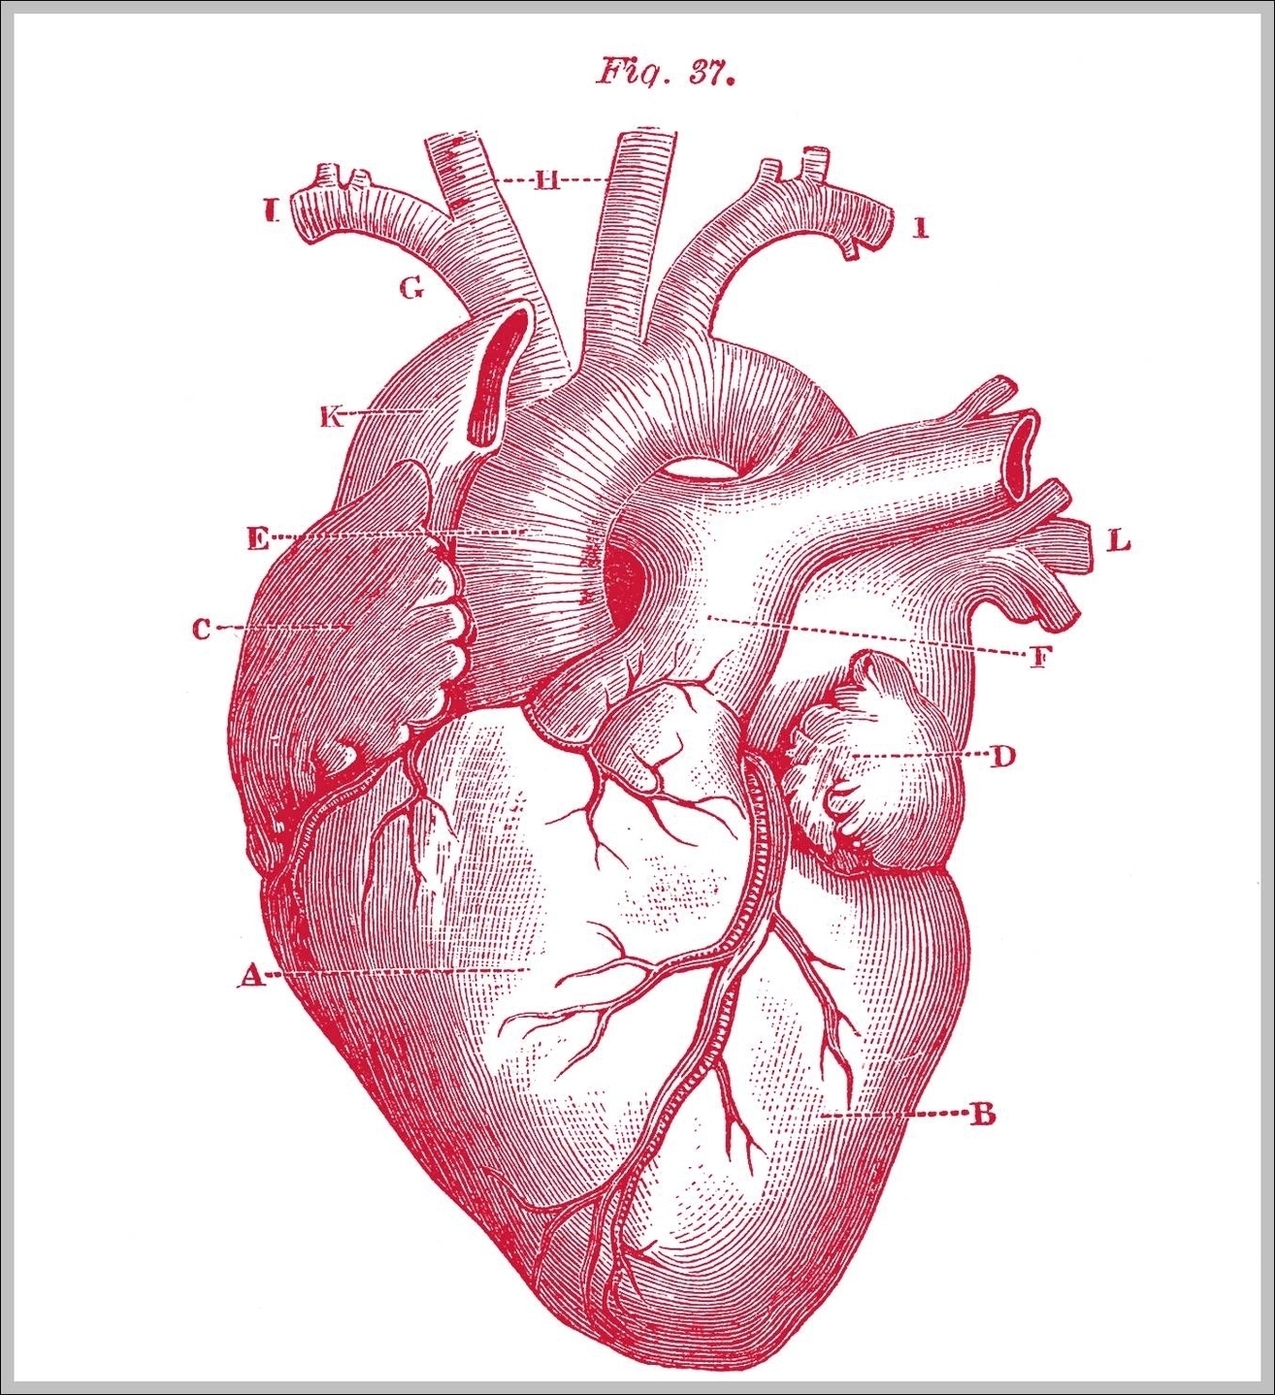 Anatomic Heart Image